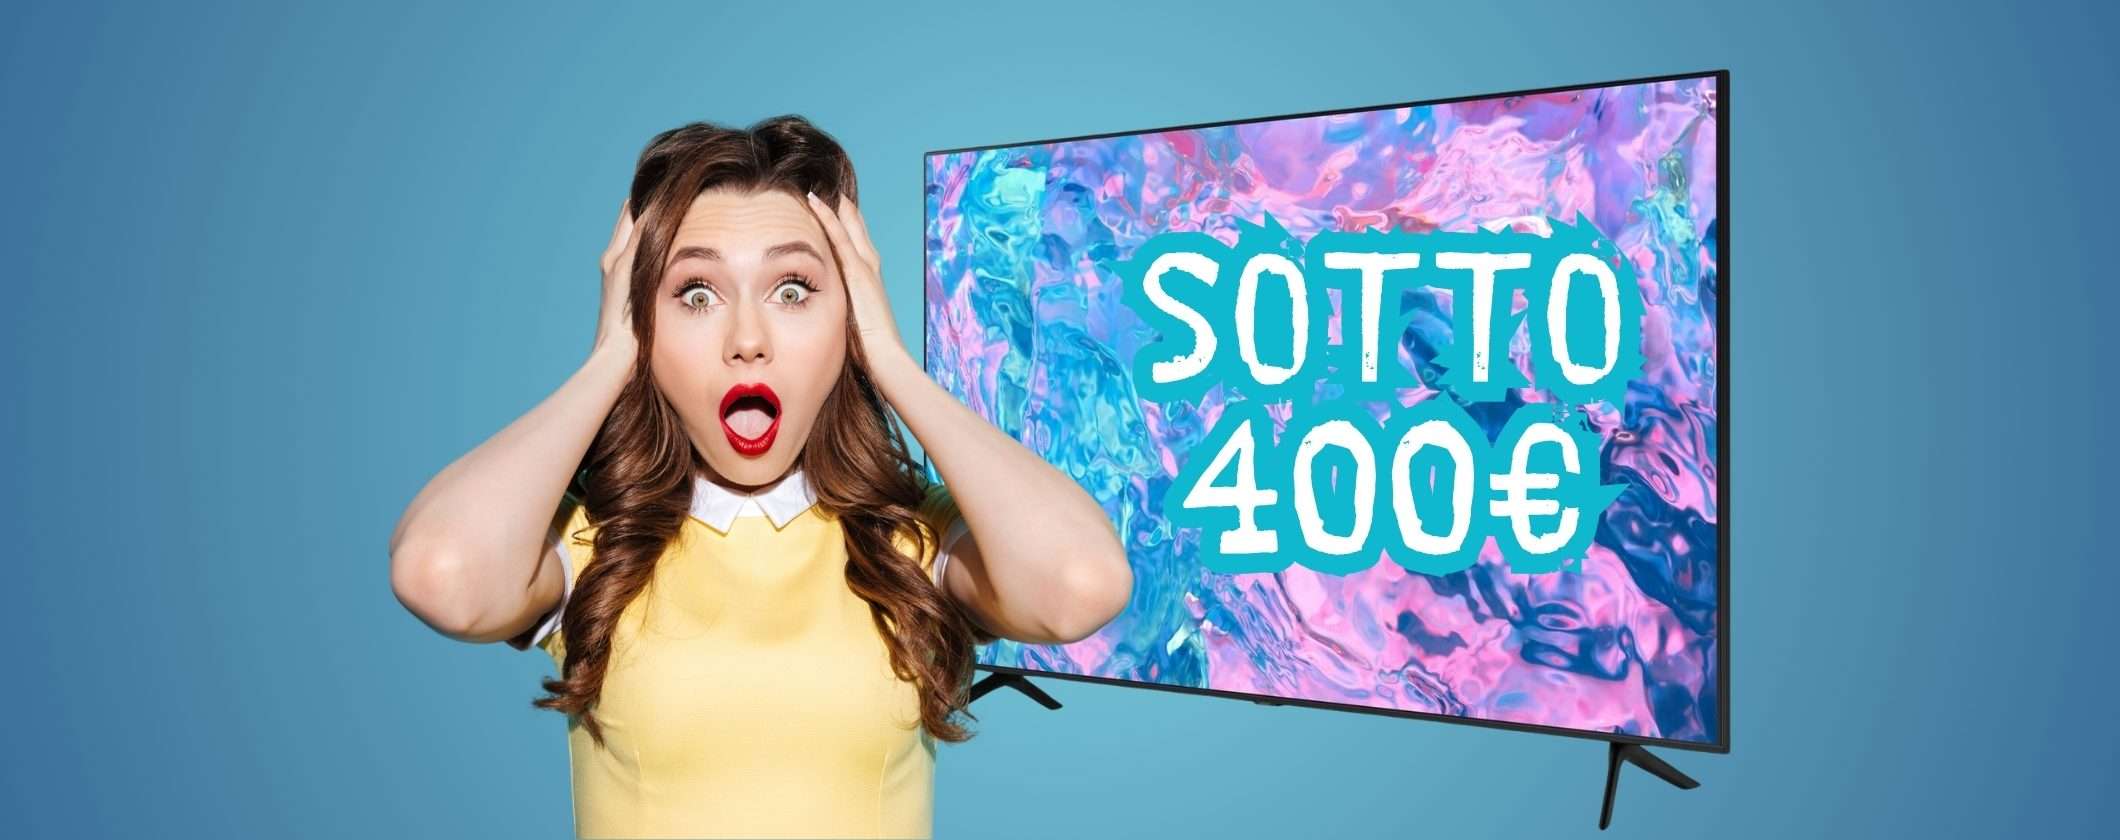 Smart TV 4K Samsung GIGANTE sotto i 400€ su eBay